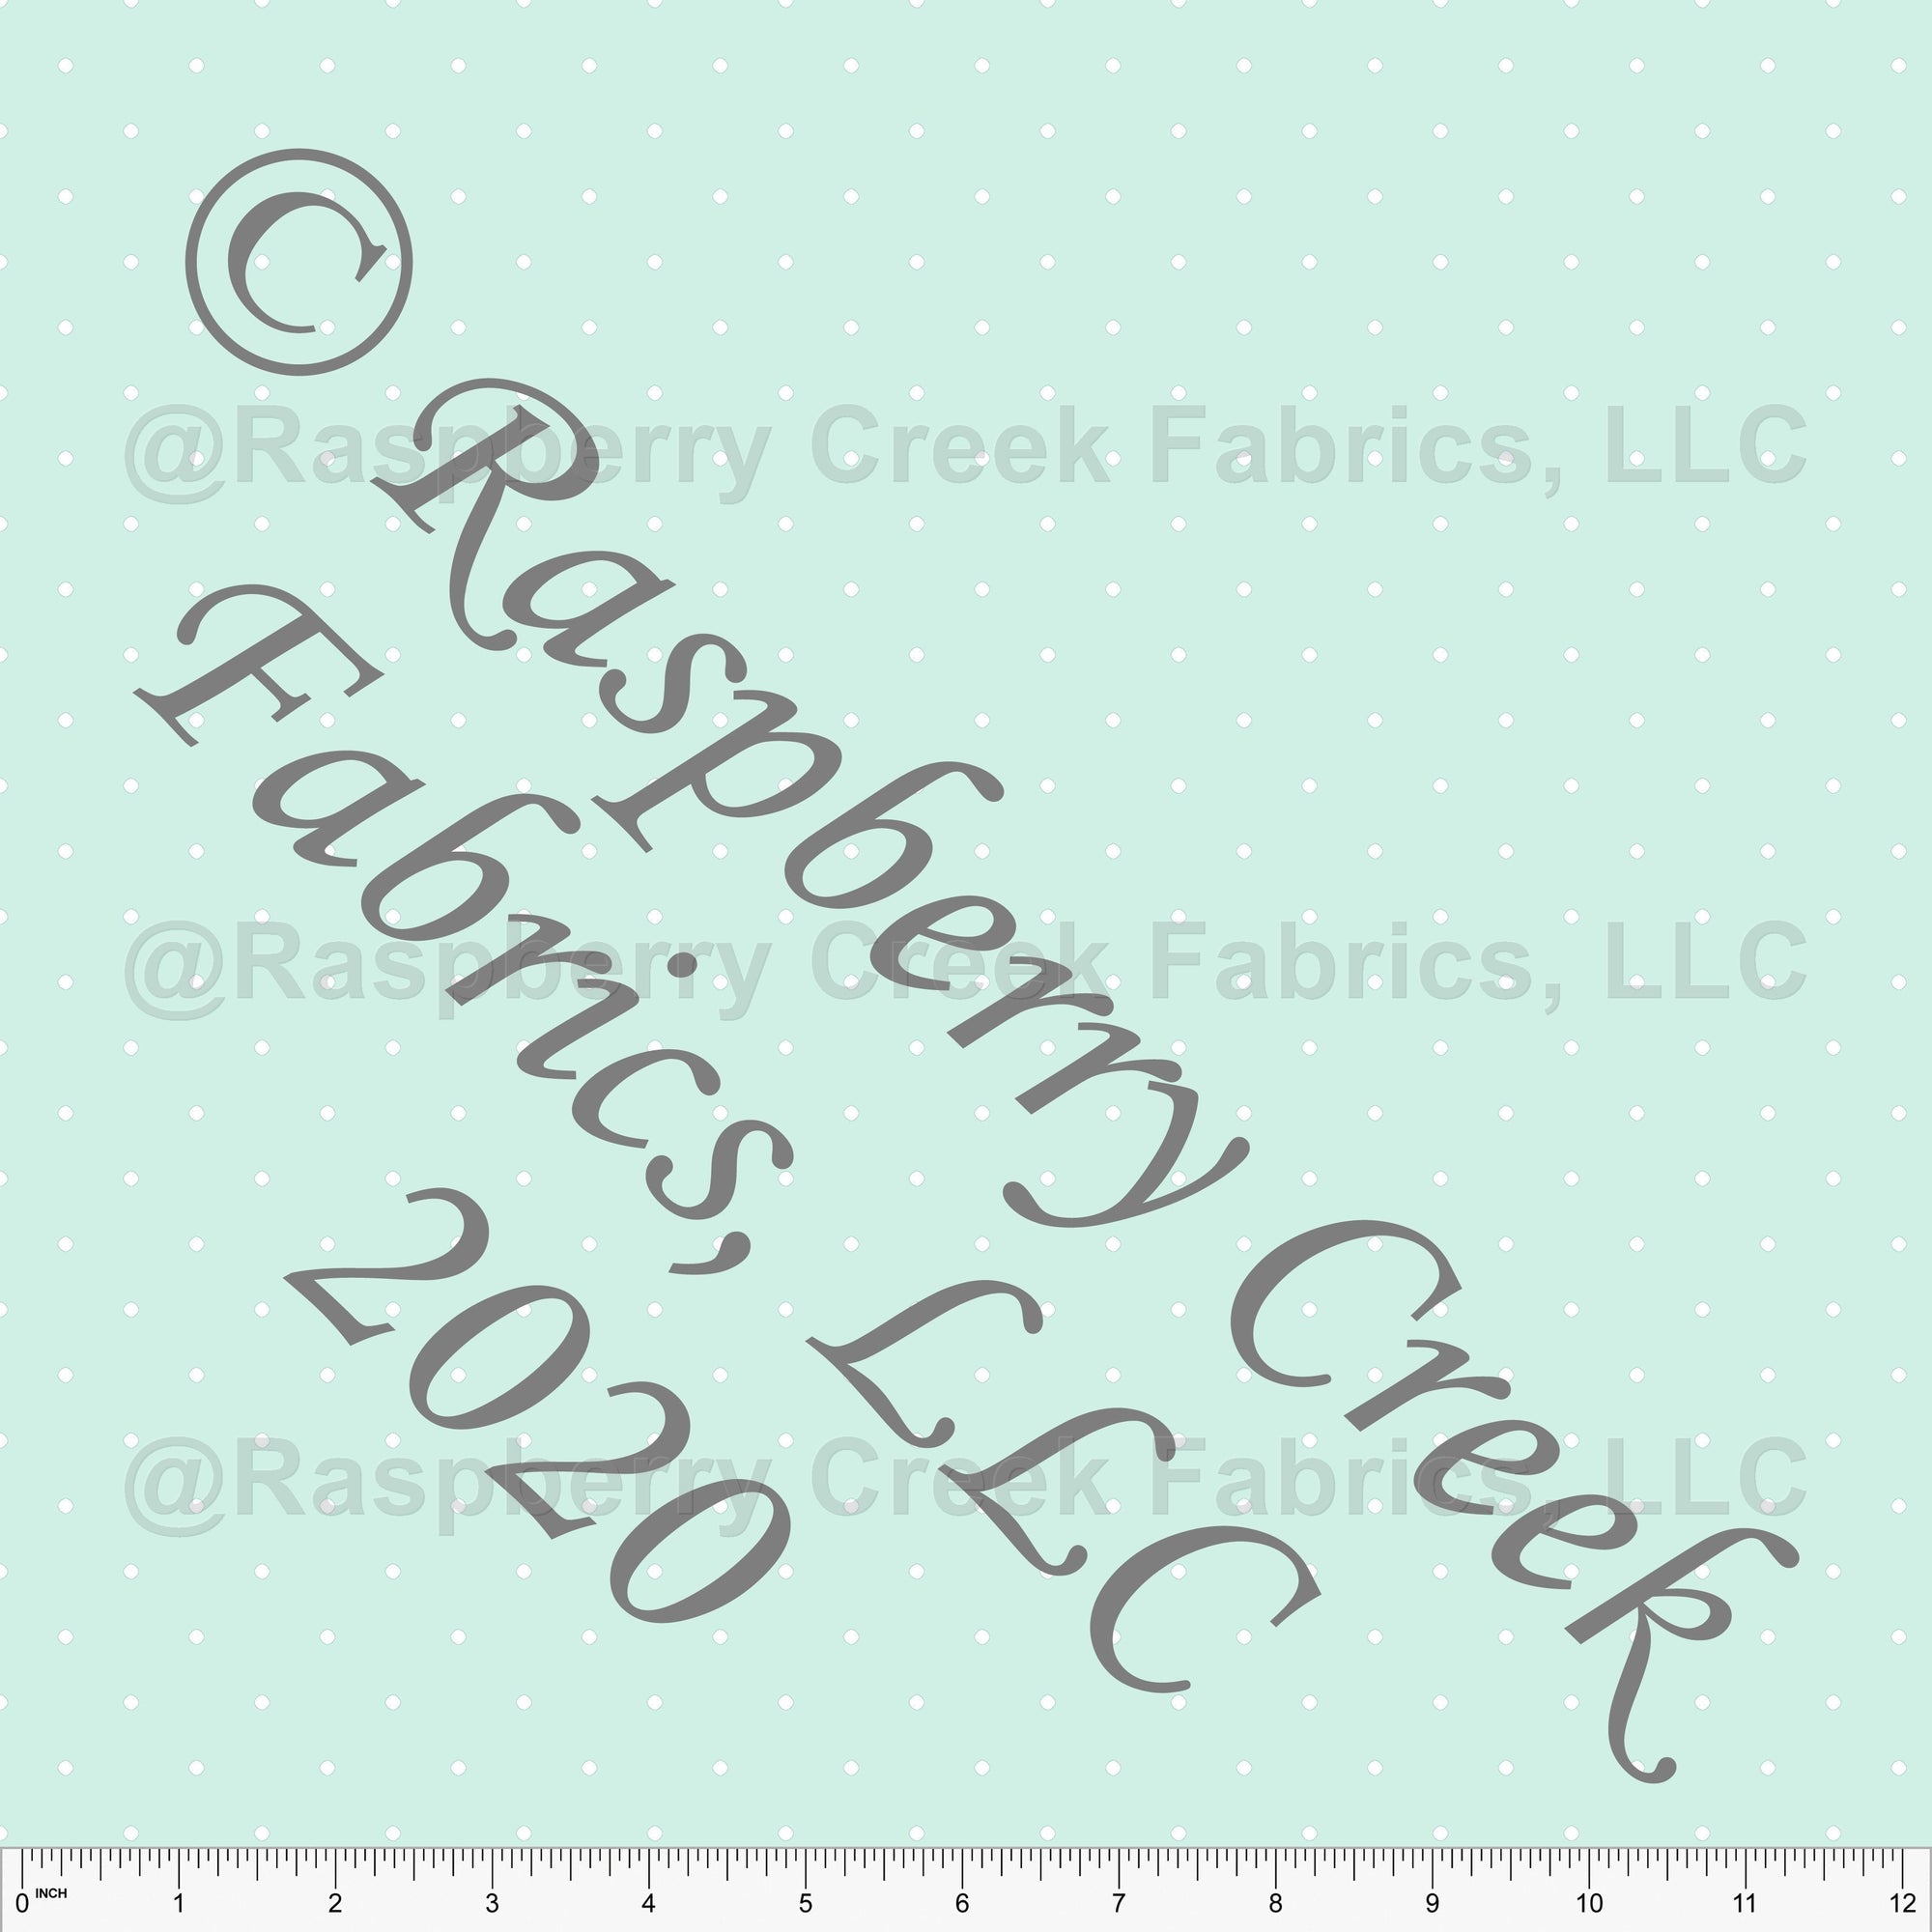 Mint and White Pin Dot, Basics for CLUB Fabrics Fabric, Raspberry Creek Fabrics, watermarked